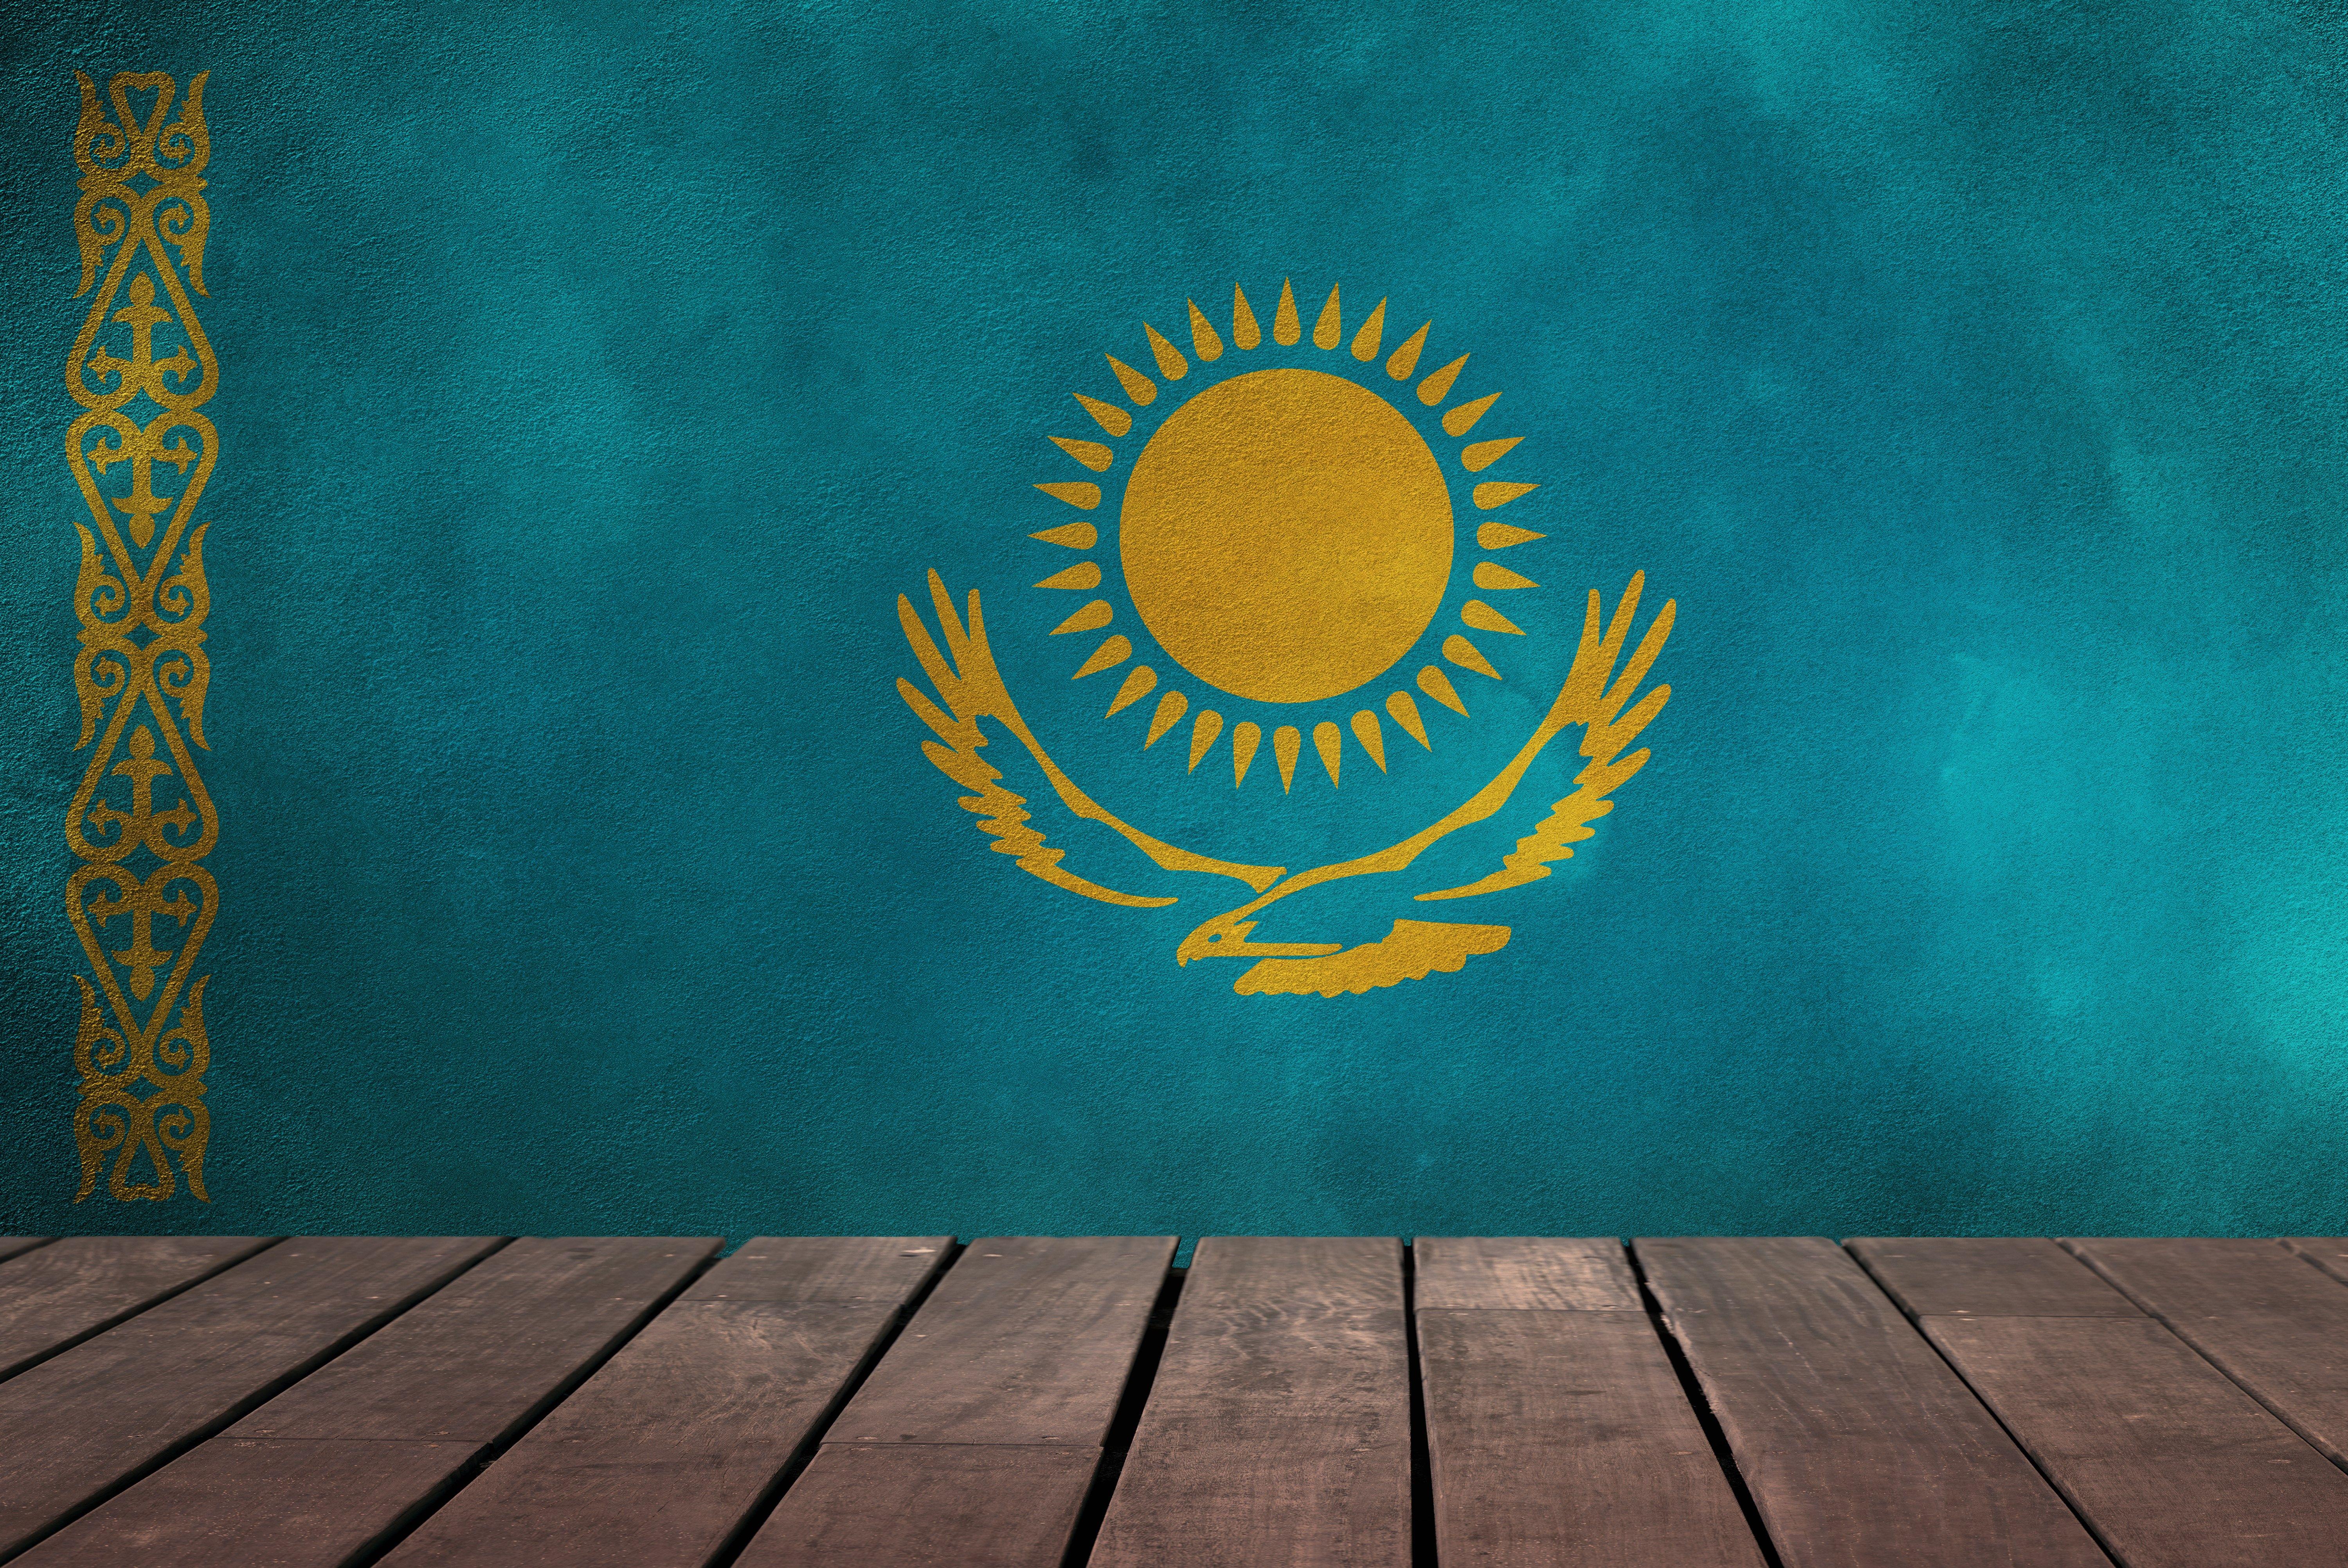 6000x4007px flag of kazakhstan desktop background wallpaper